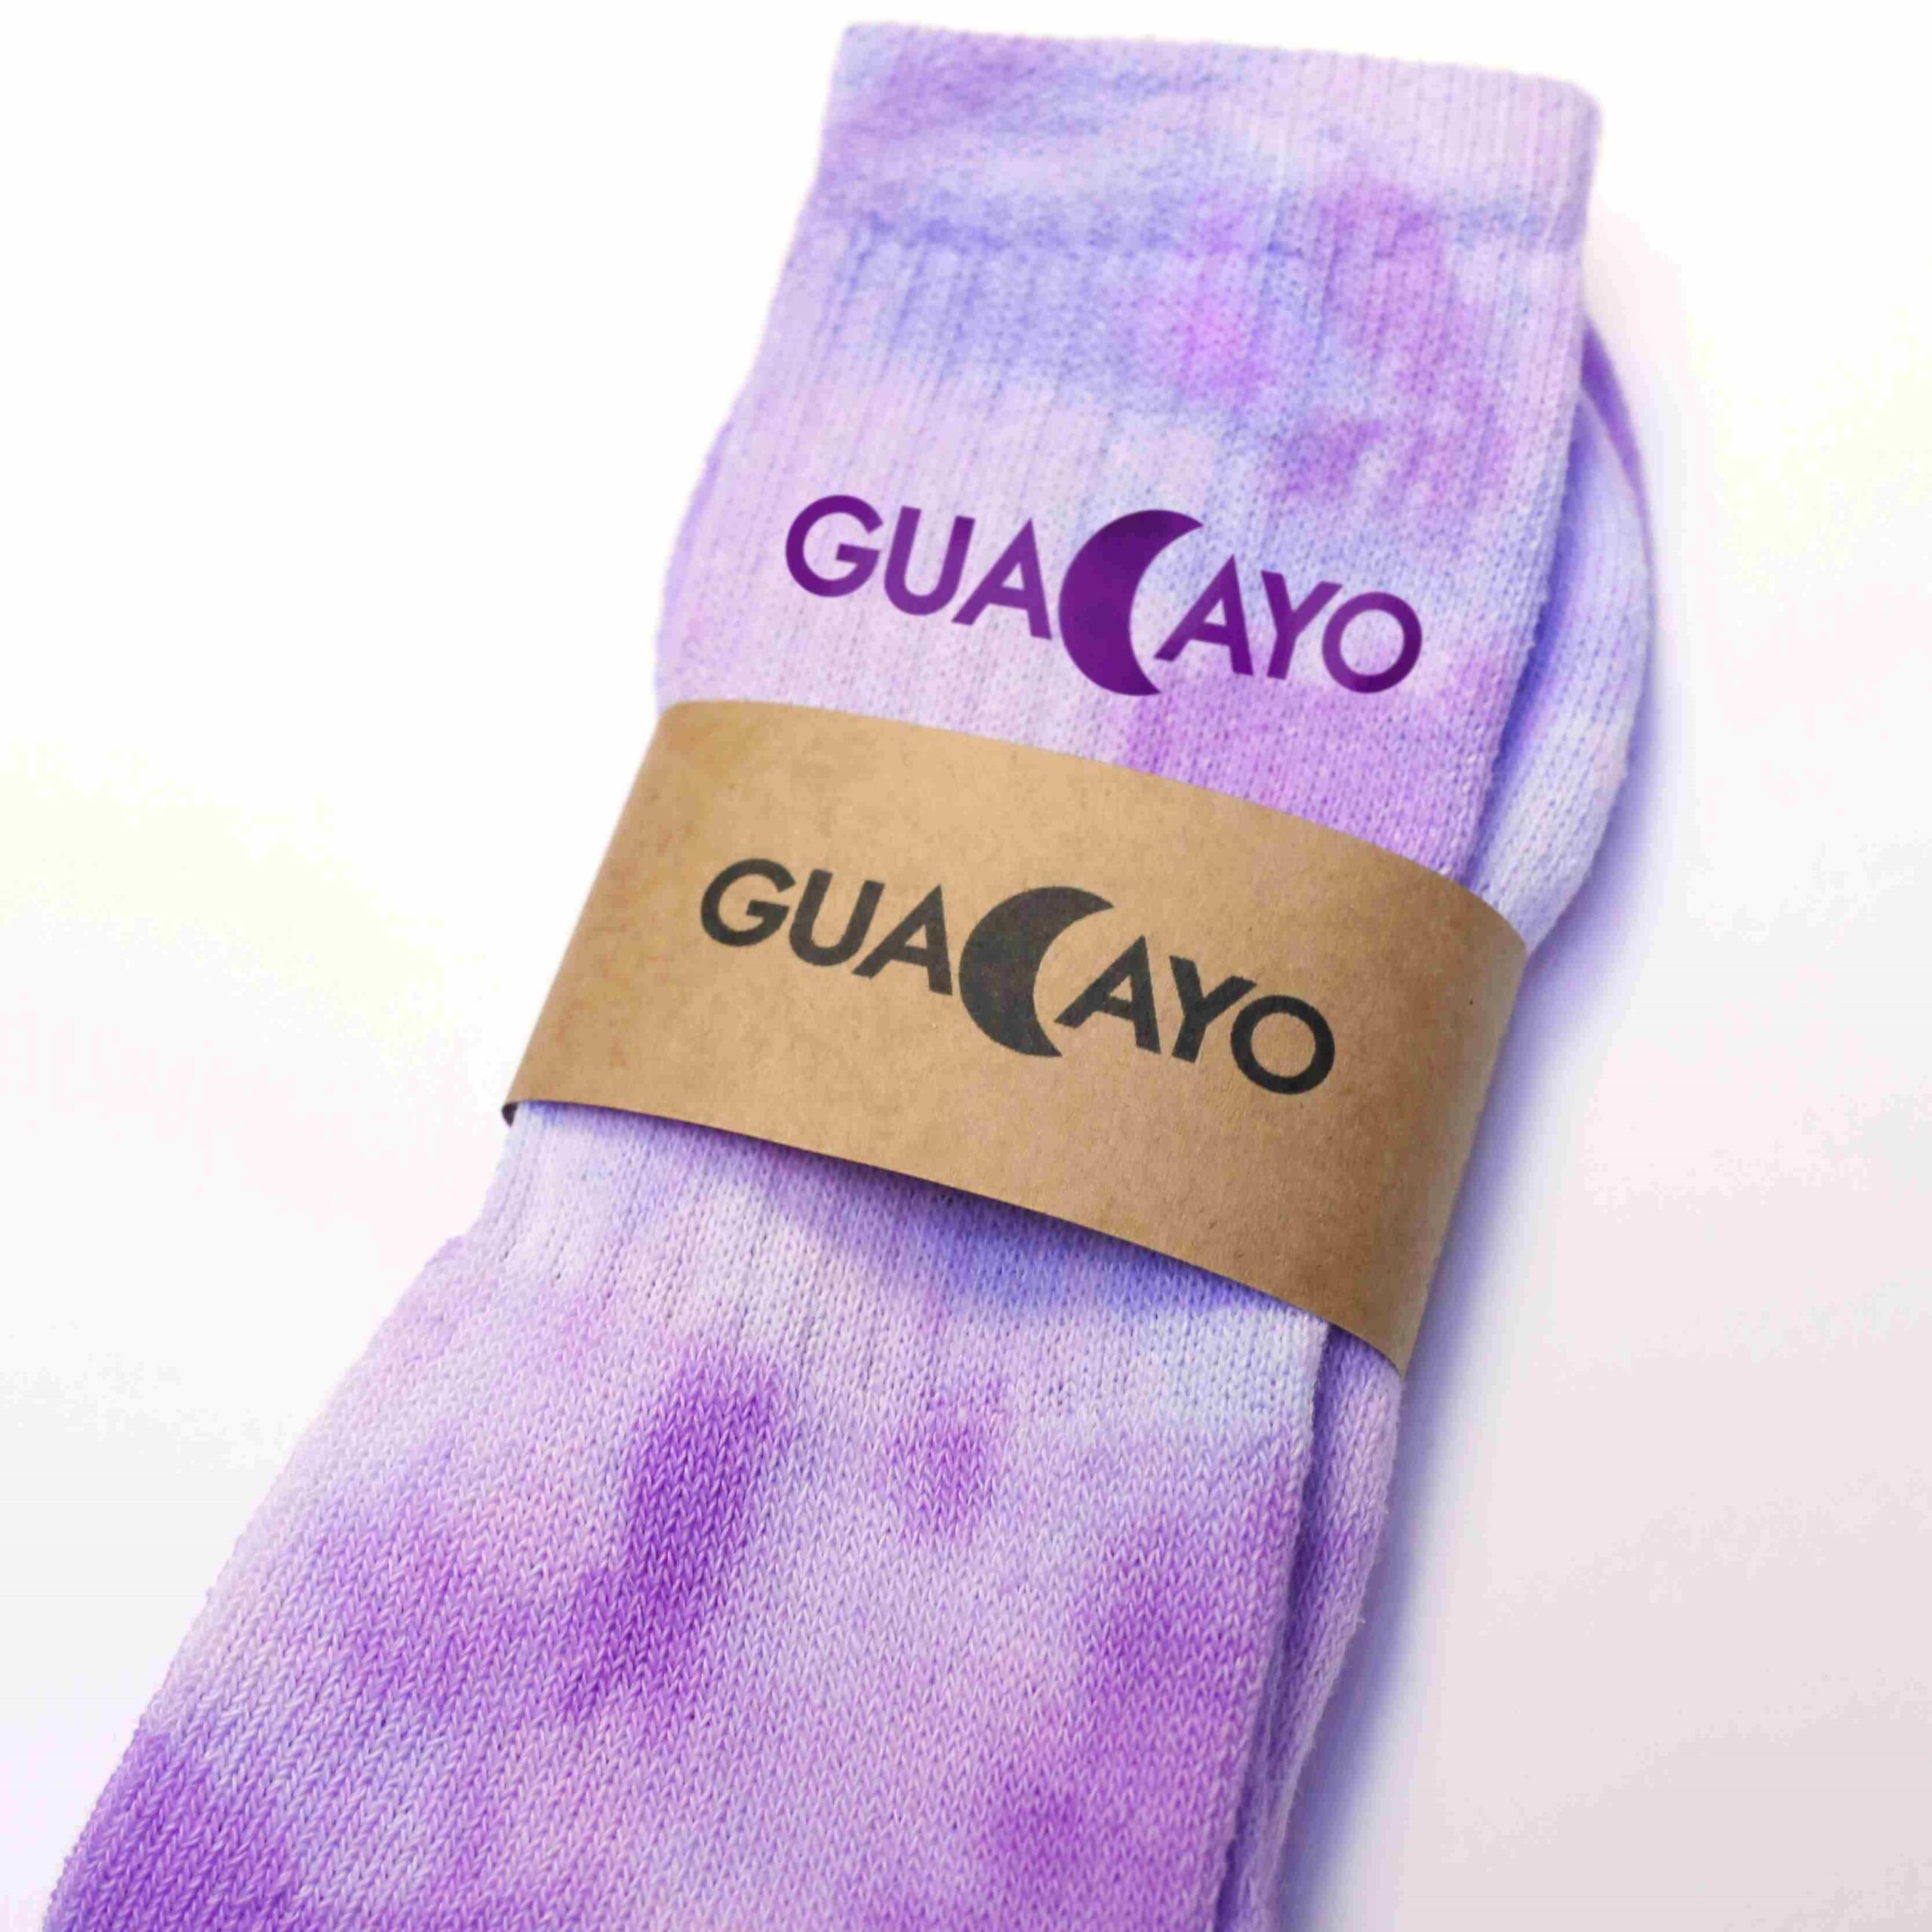 GUACAYO_Socken_02_Quadratisch_klein